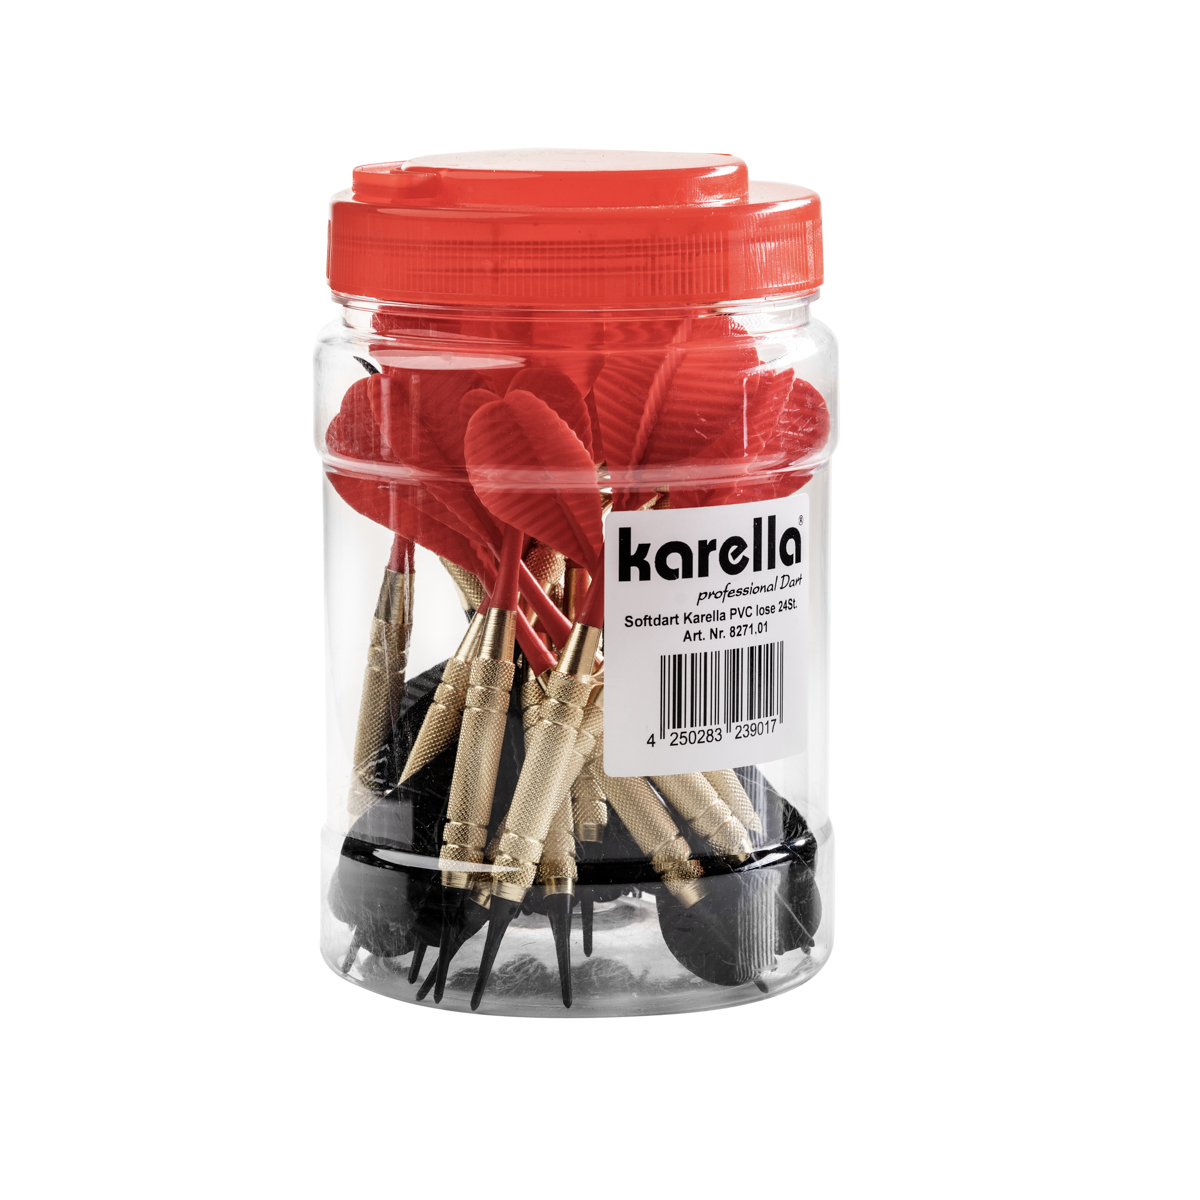 Softdart Karella PVC 24 pcs. Red and black